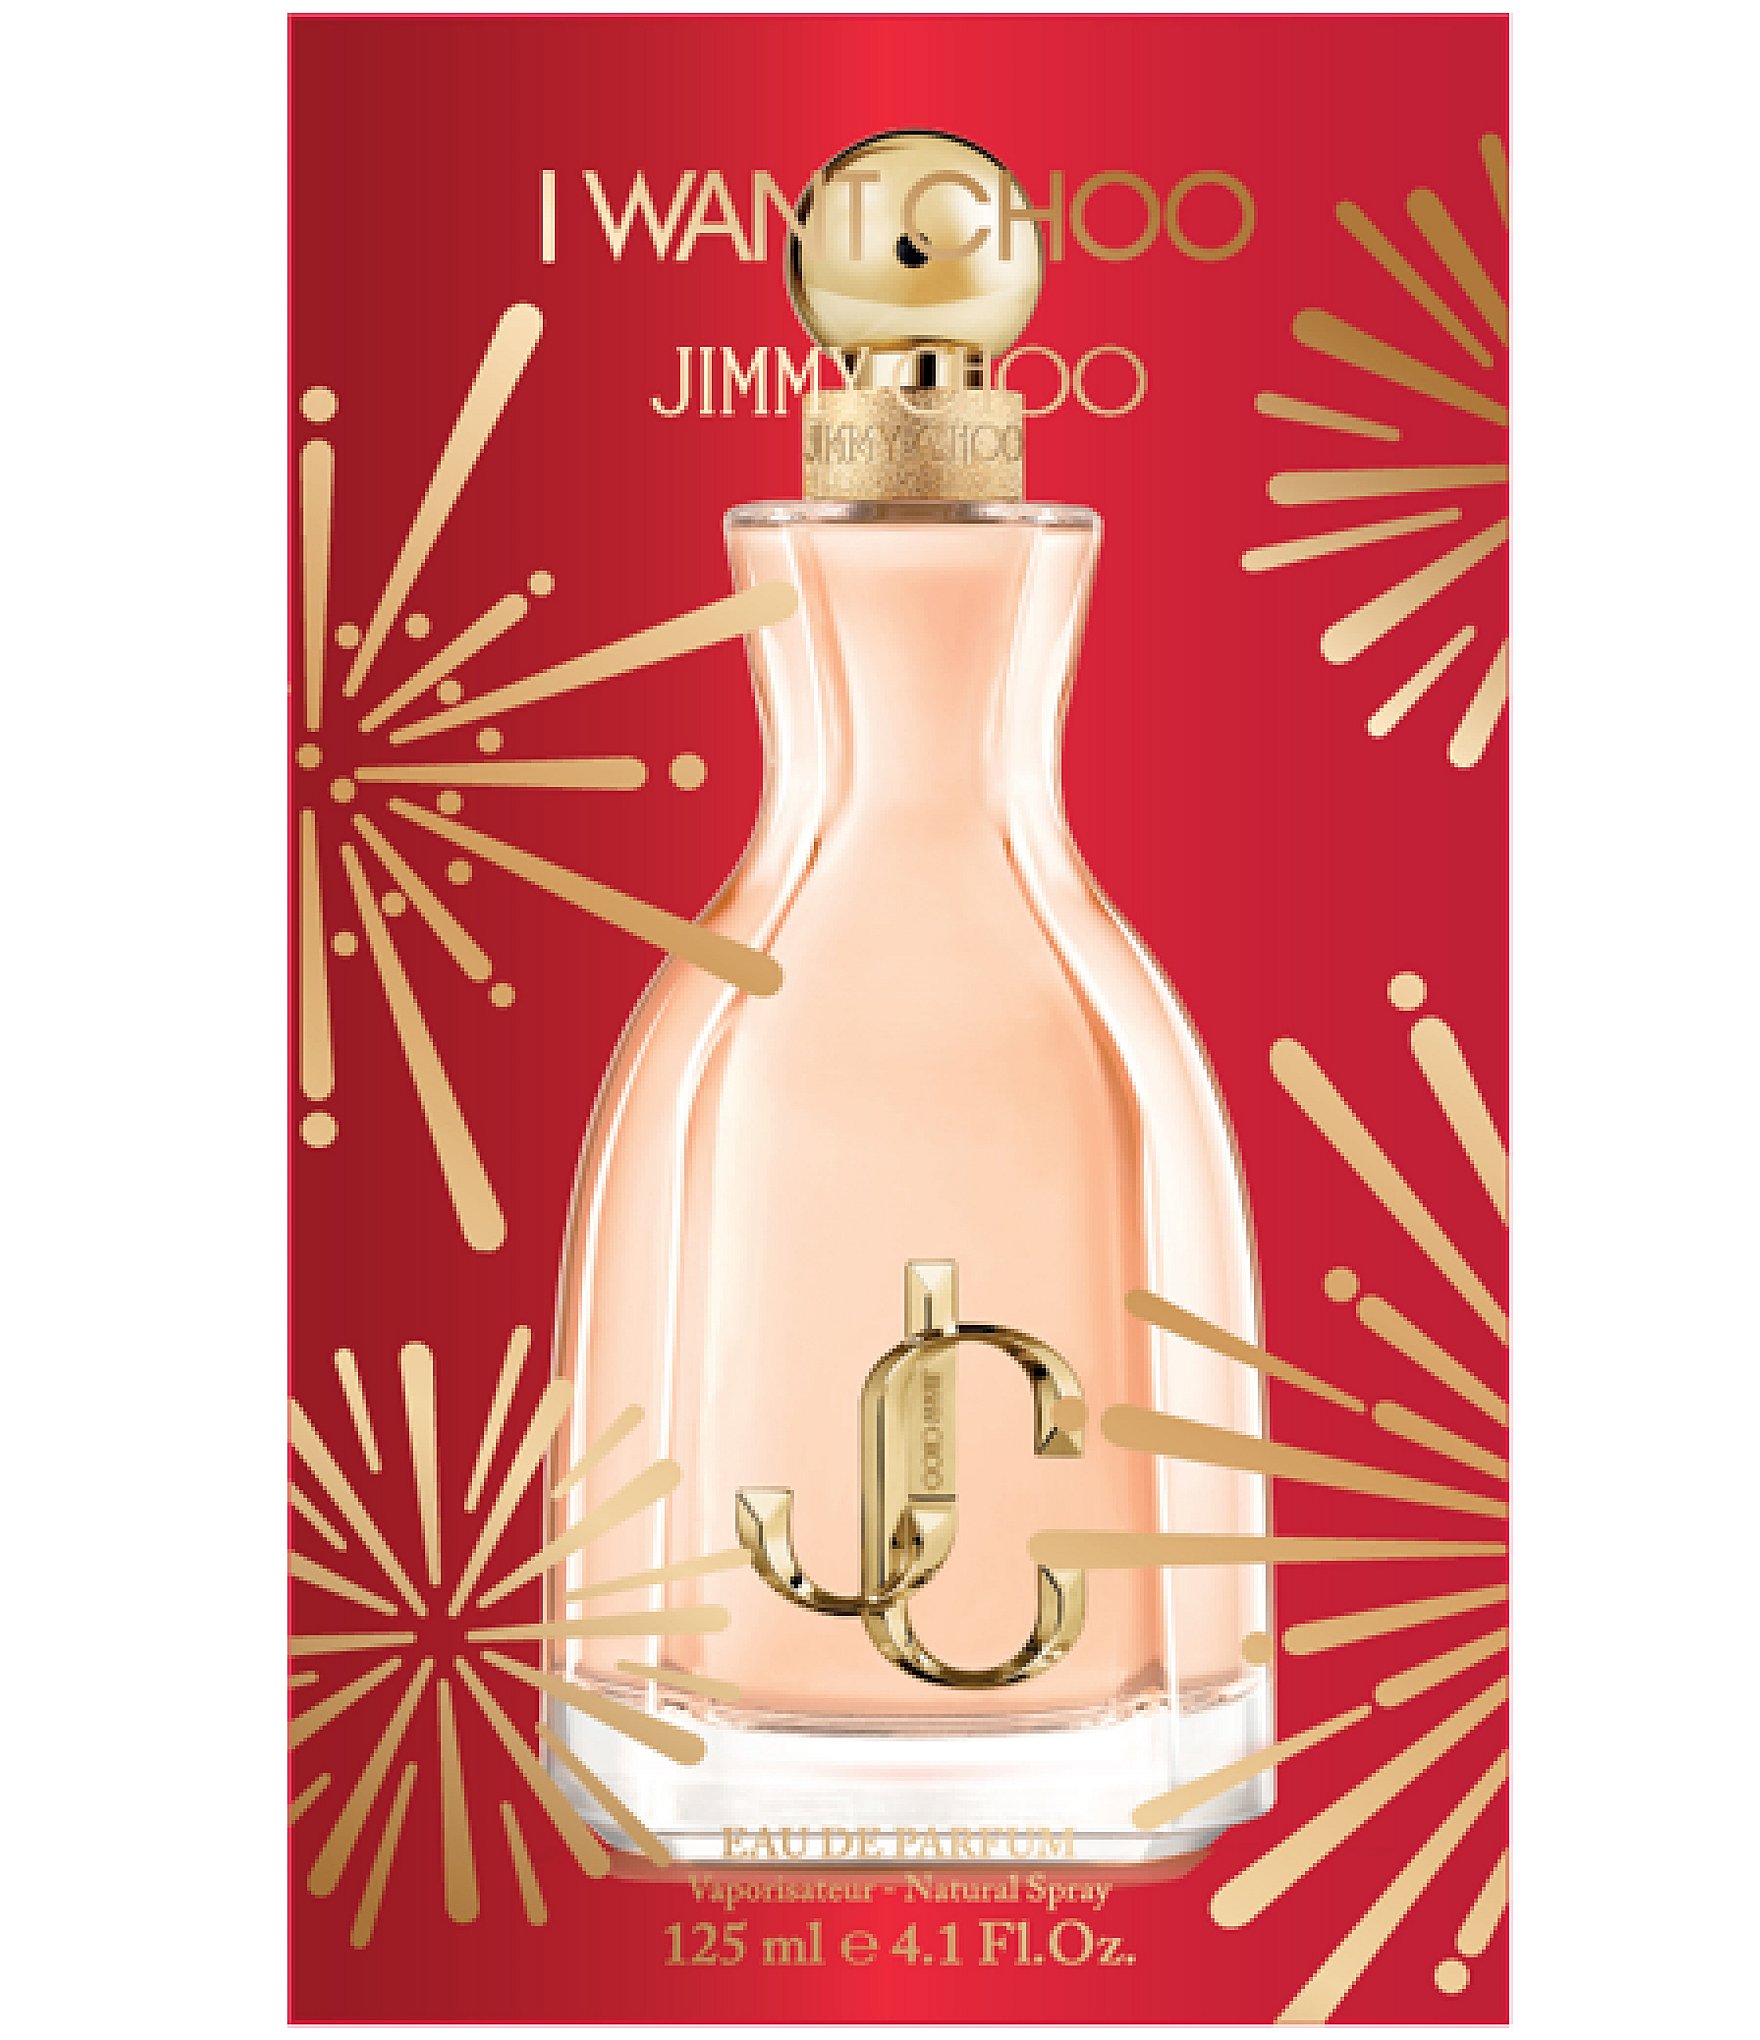 Jimmy Choo I Want Choo Eau de Parfum Holiday Limited Edition Jumbo 4.1